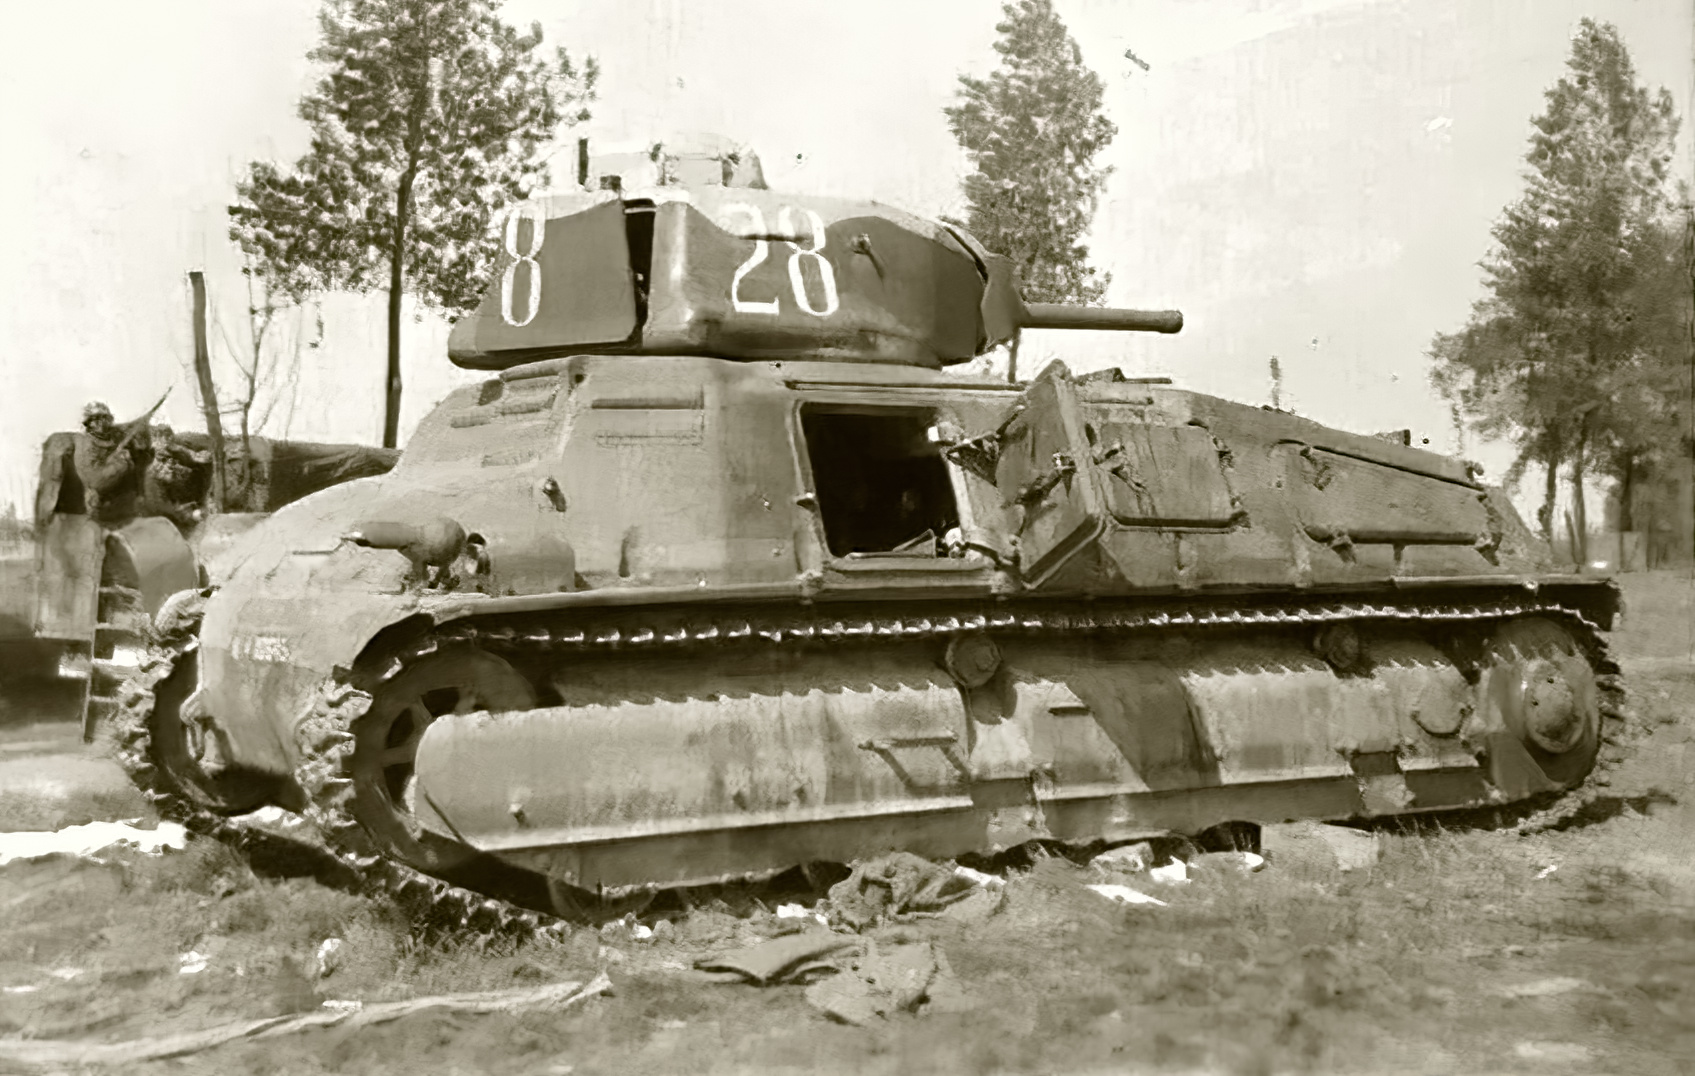 French Army Somua S35 White 28 abandoned along a roadside France June 1940 ebay 01